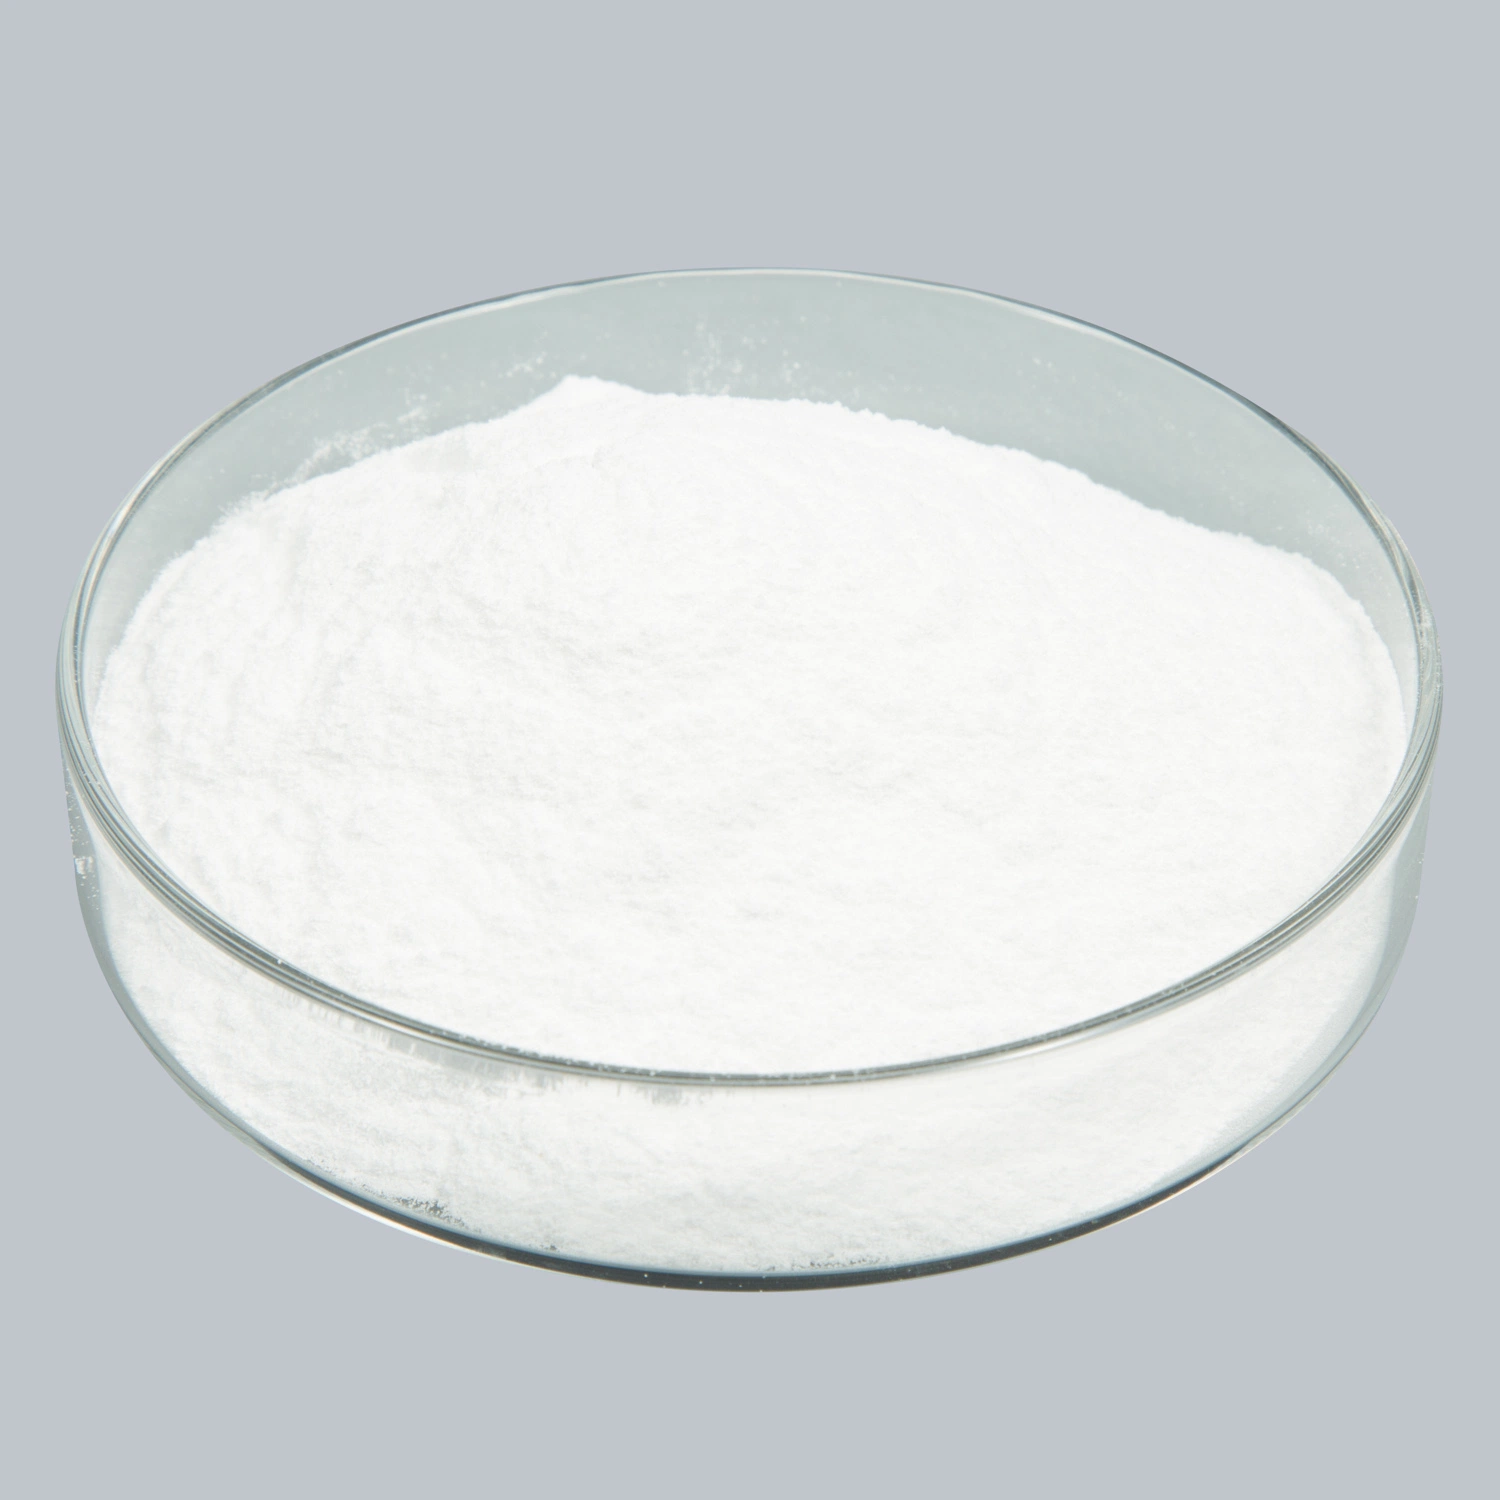 High Purity 99% Powder CAS 30123-17-2 Tianeptine Sodium/Tianeptine Acid/Tianeptine Sulfate